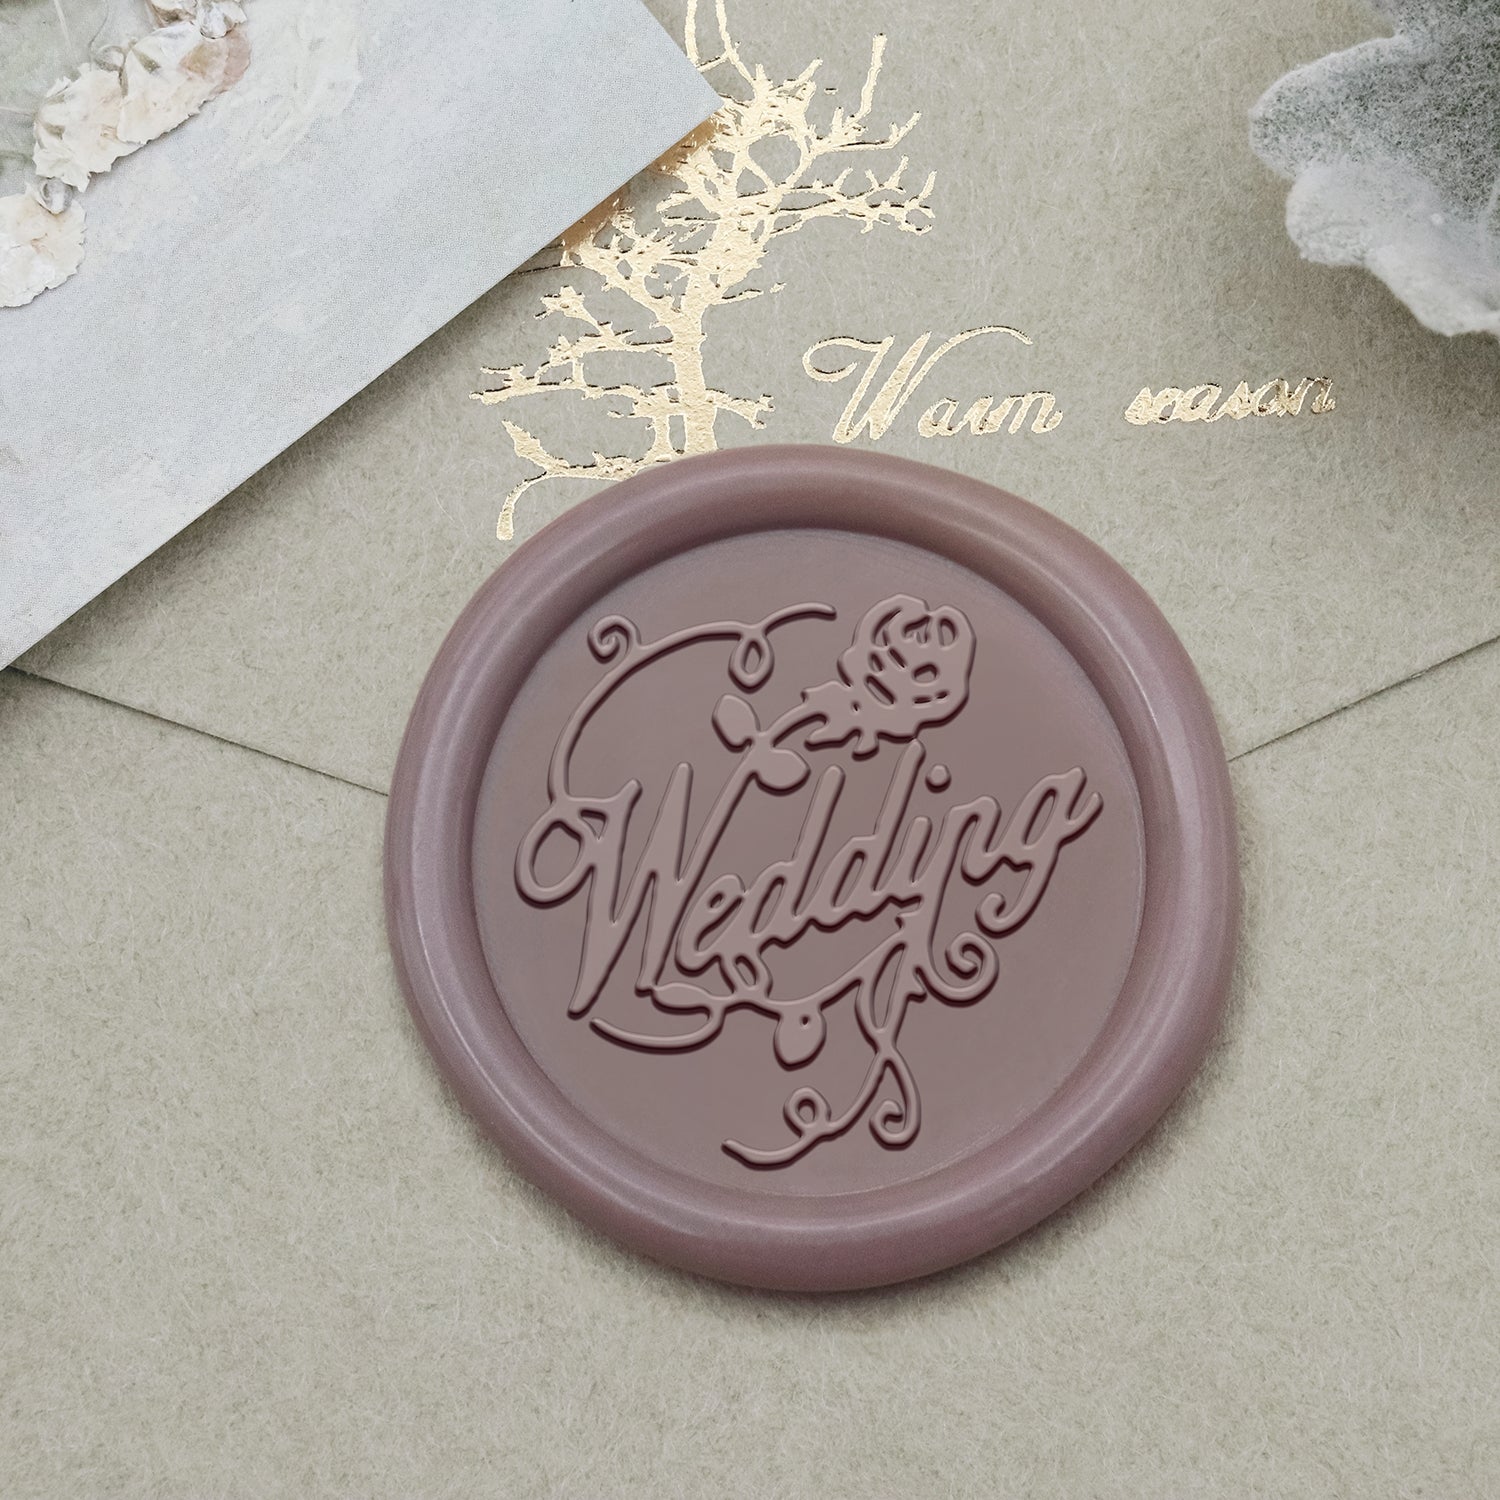 Stamprints Greeting Wax Seal Stamp - Wedding 1